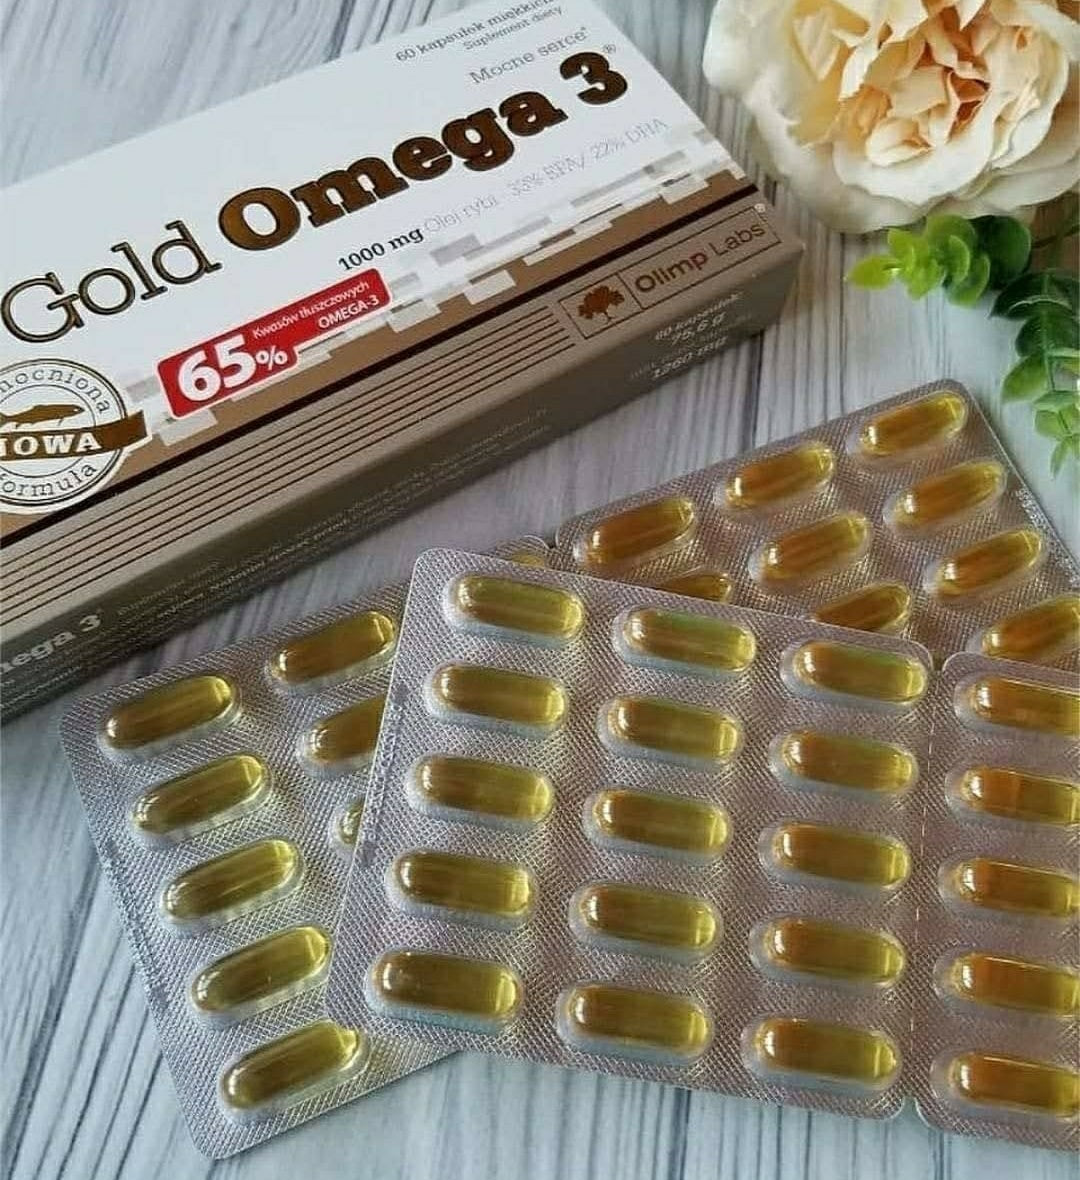 Gold Omega 3 Olimp - 60 caps | Megapump